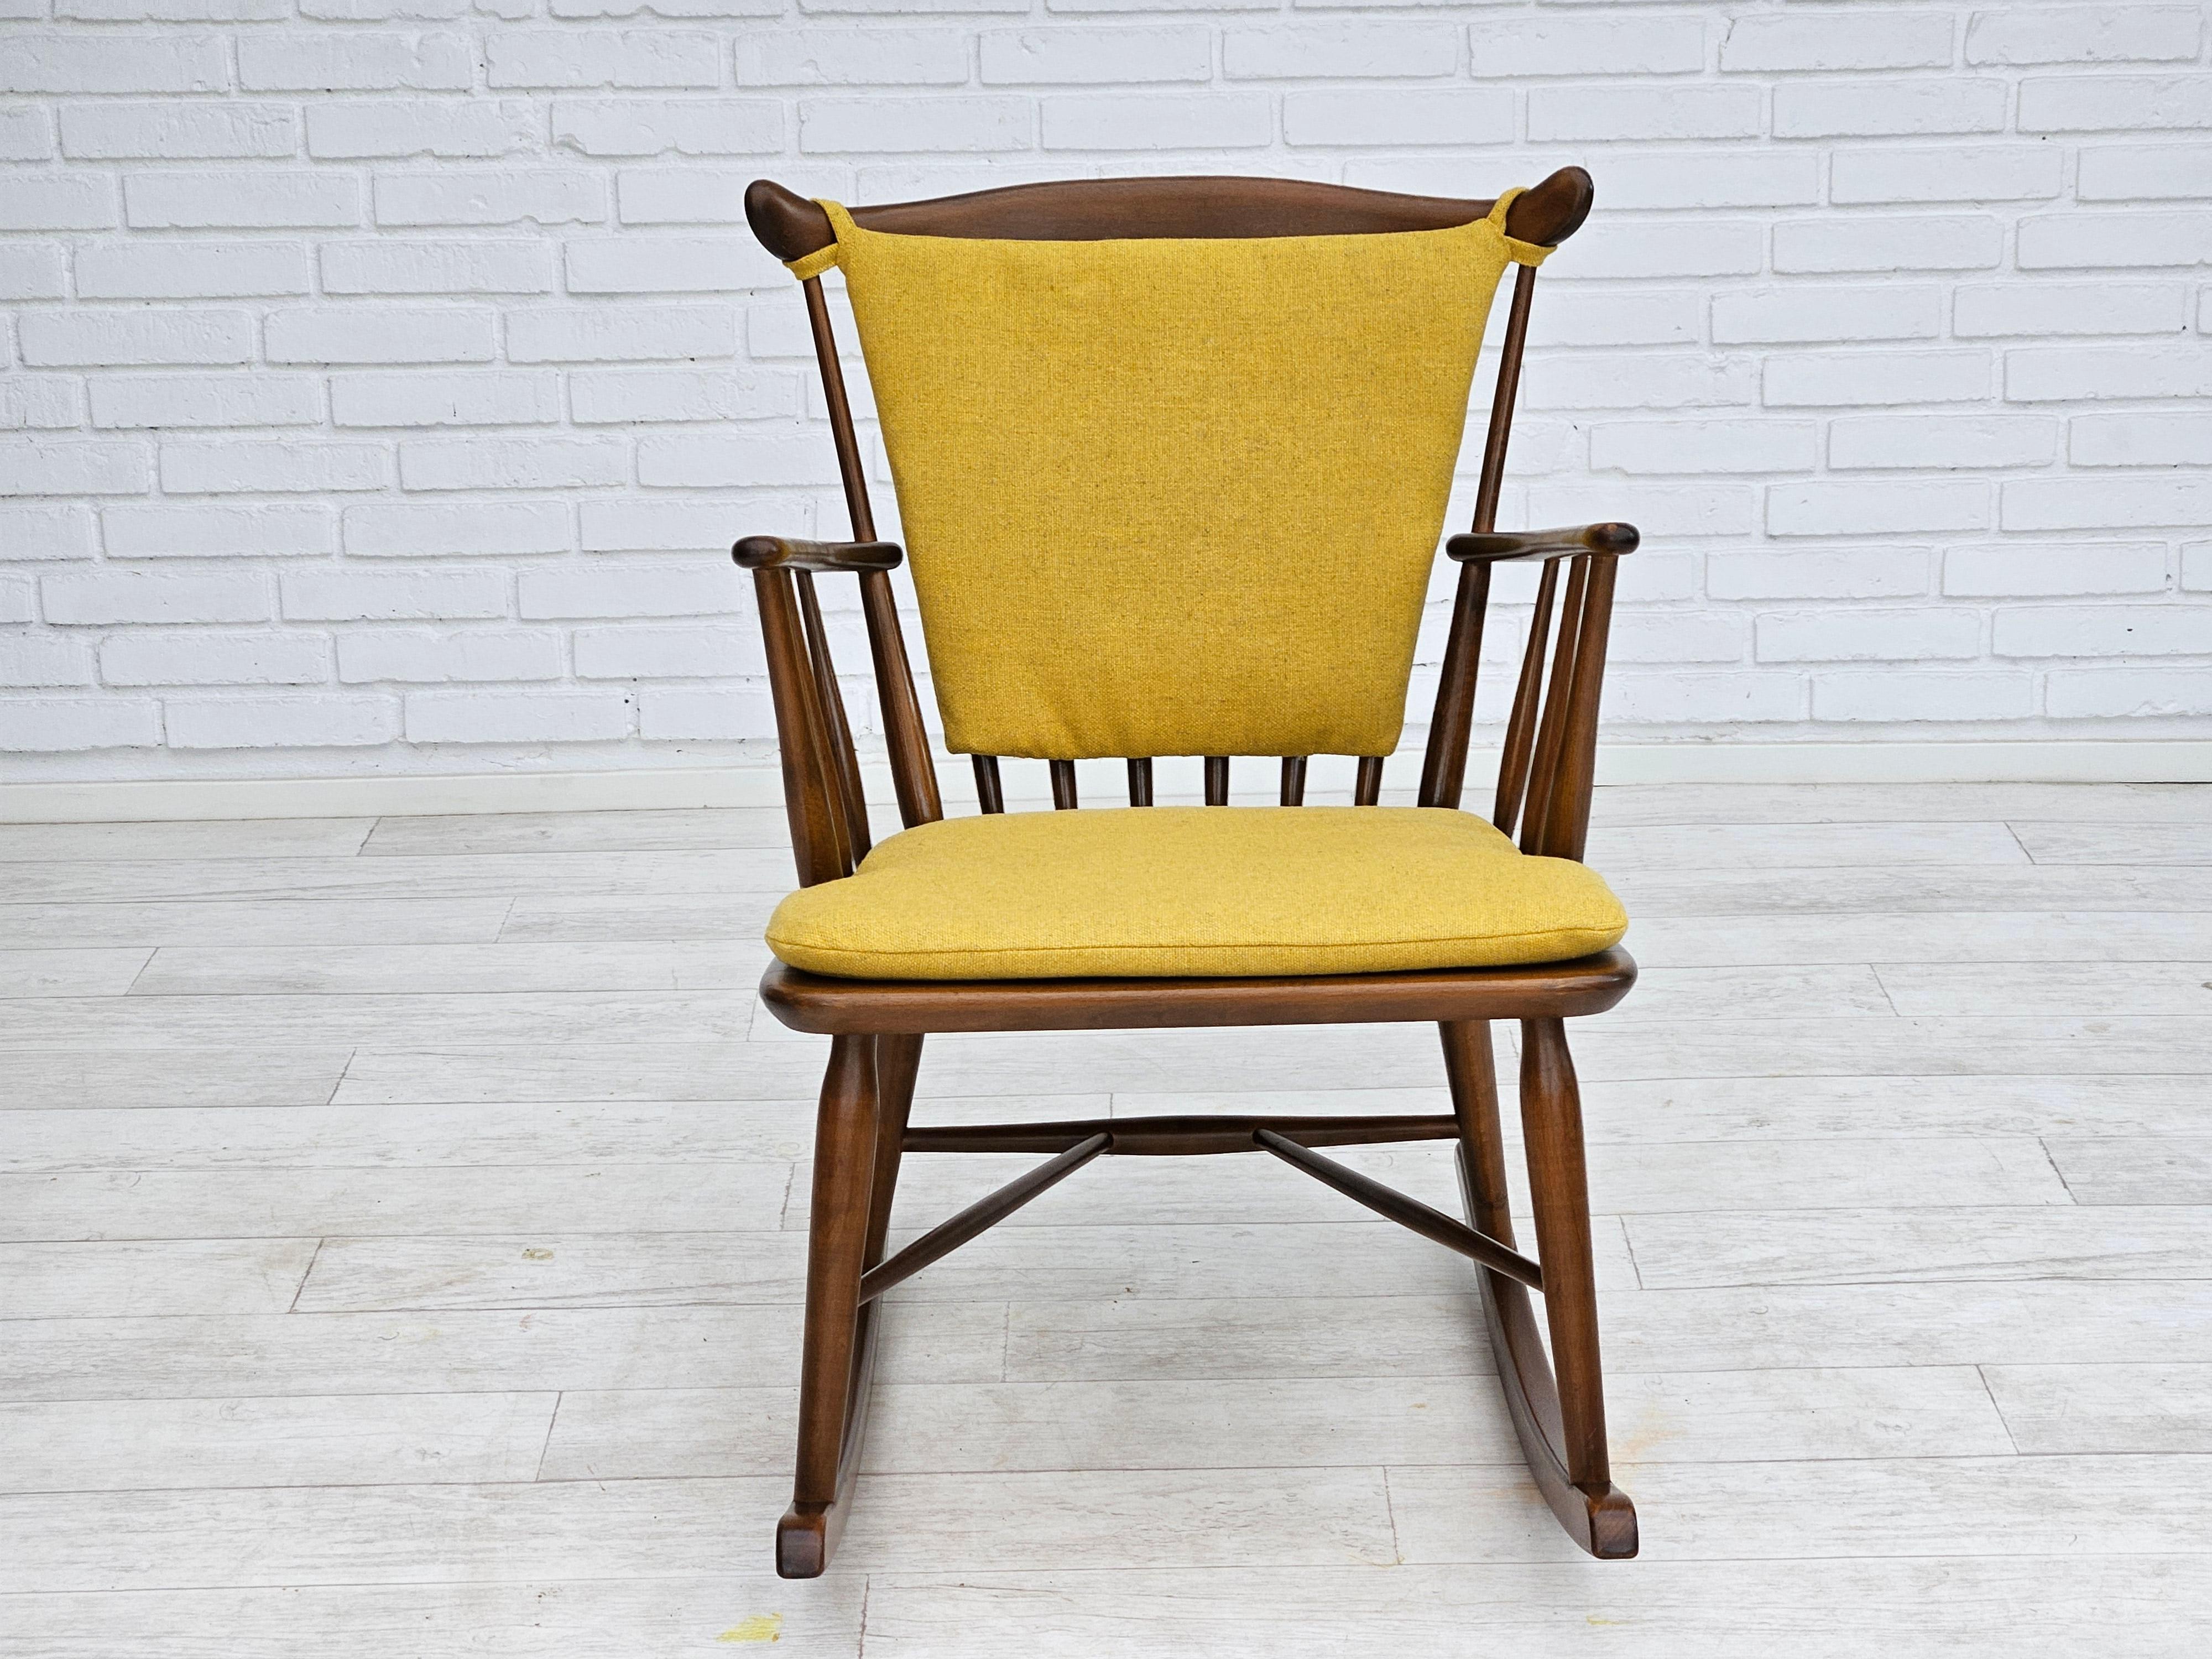 Scandinavian Modern 1960-70s, Danish design by Farstrup Stolefabrik, reupholstered rocking chair. For Sale